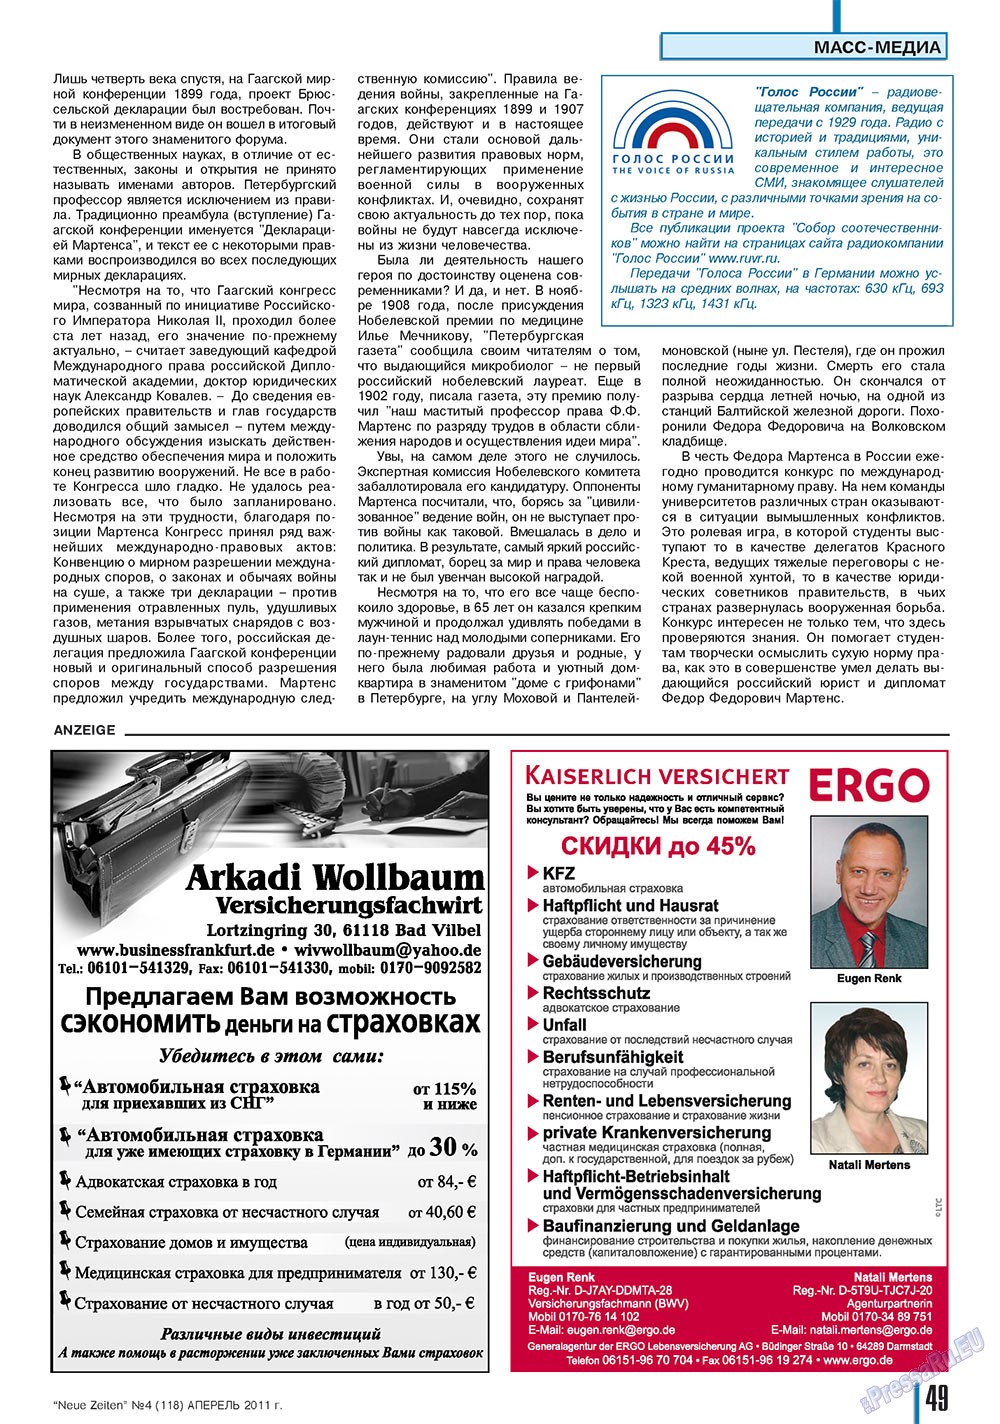 Neue Zeiten (журнал). 2011 год, номер 4, стр. 49